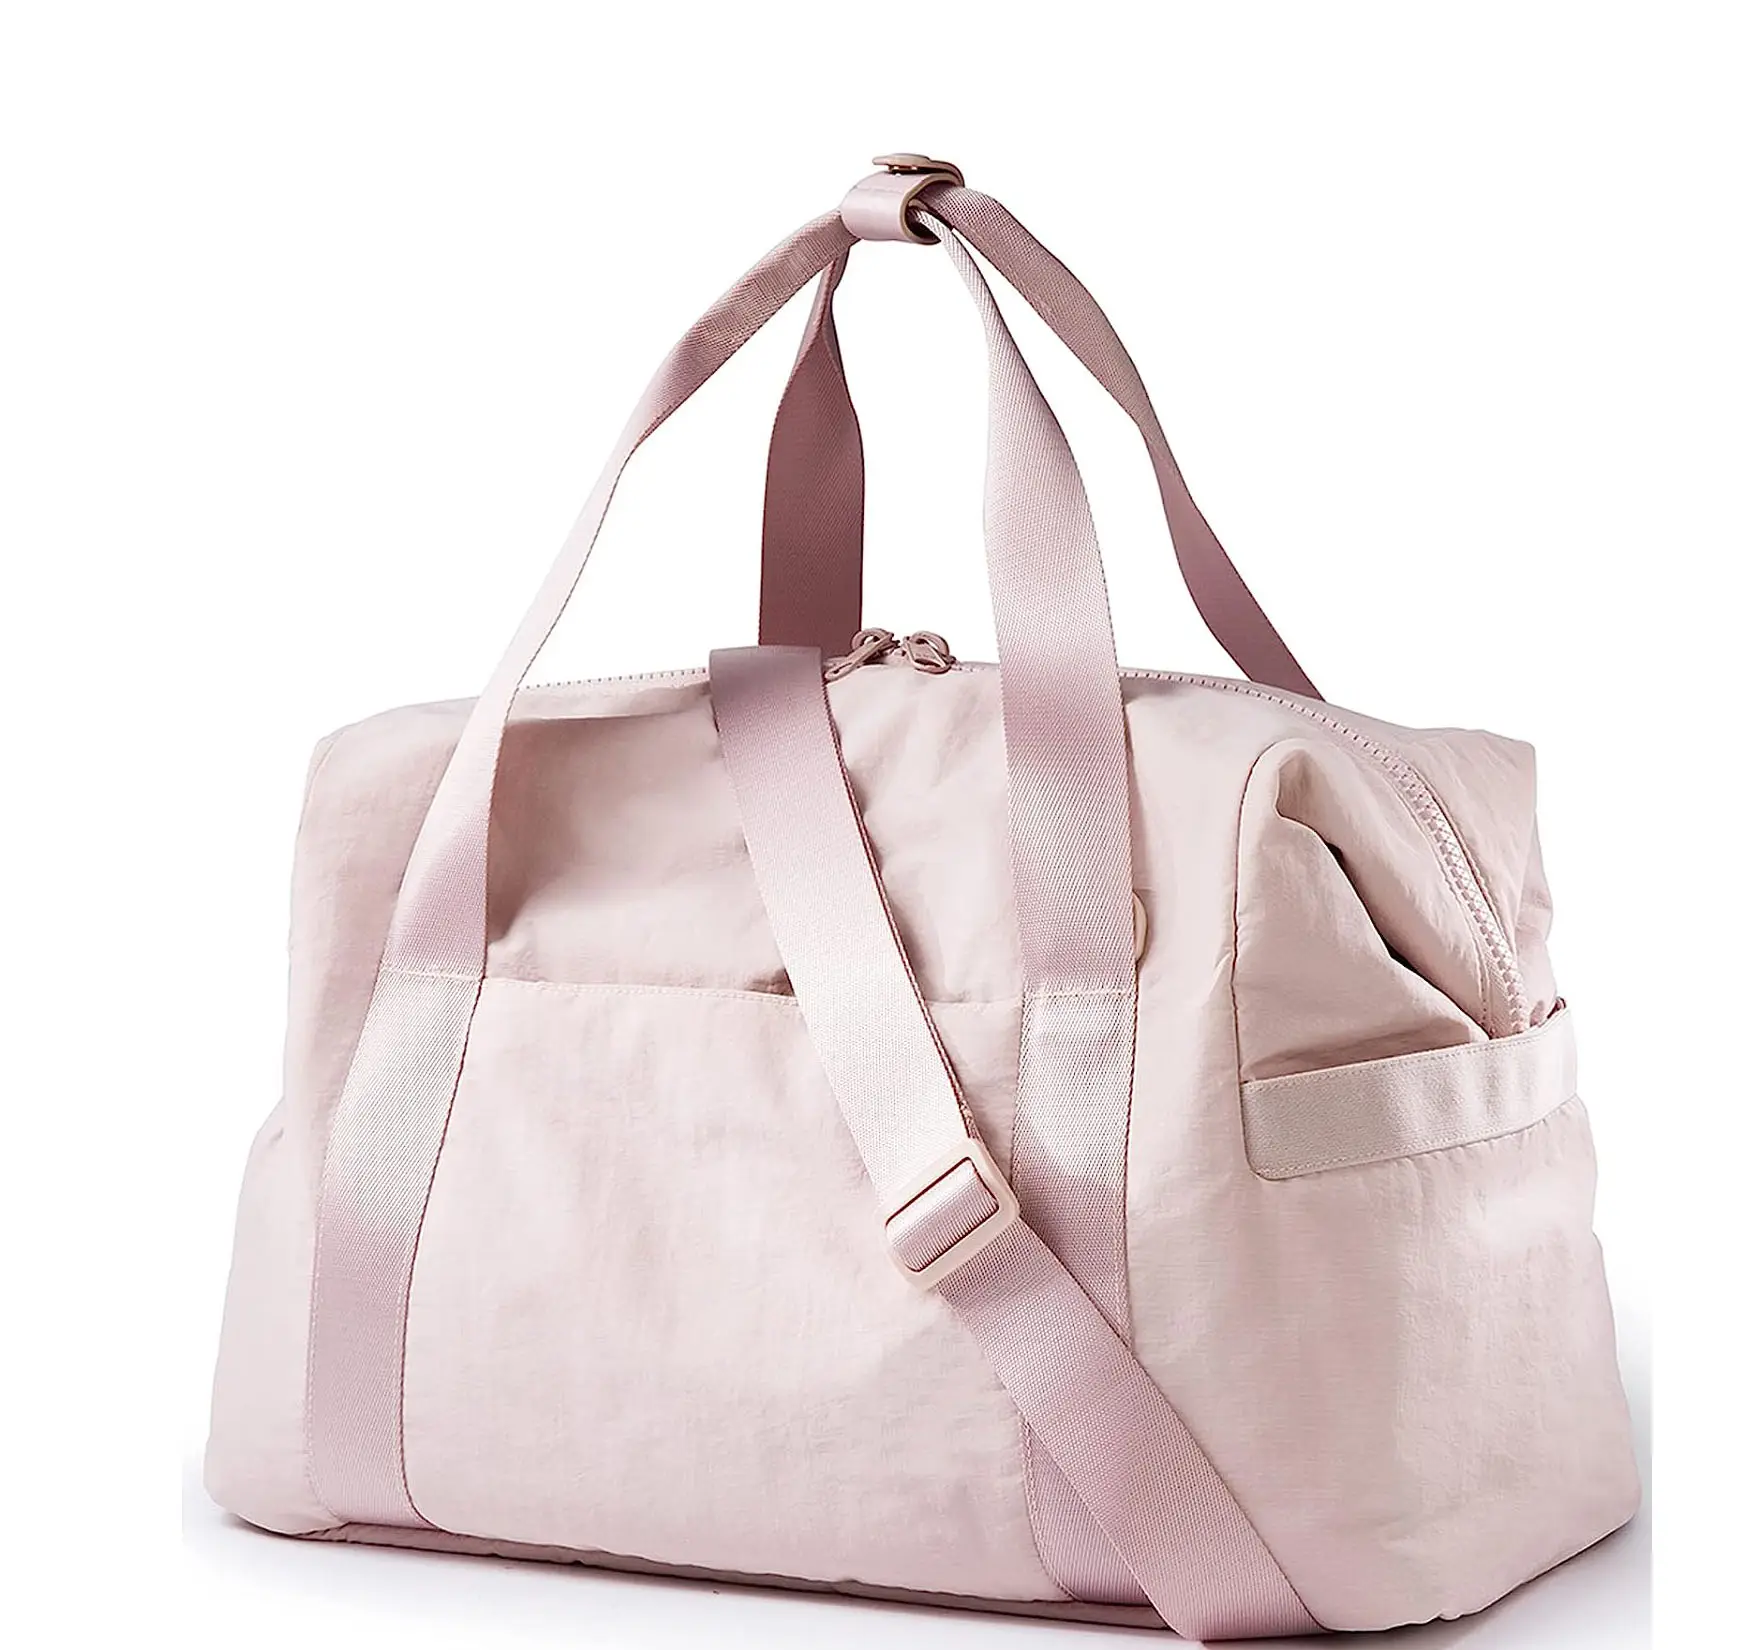 Bolsa de viaje plegable rosa para llevar de semana, bolsa de mano, bolsa de nailon para entrenamiento